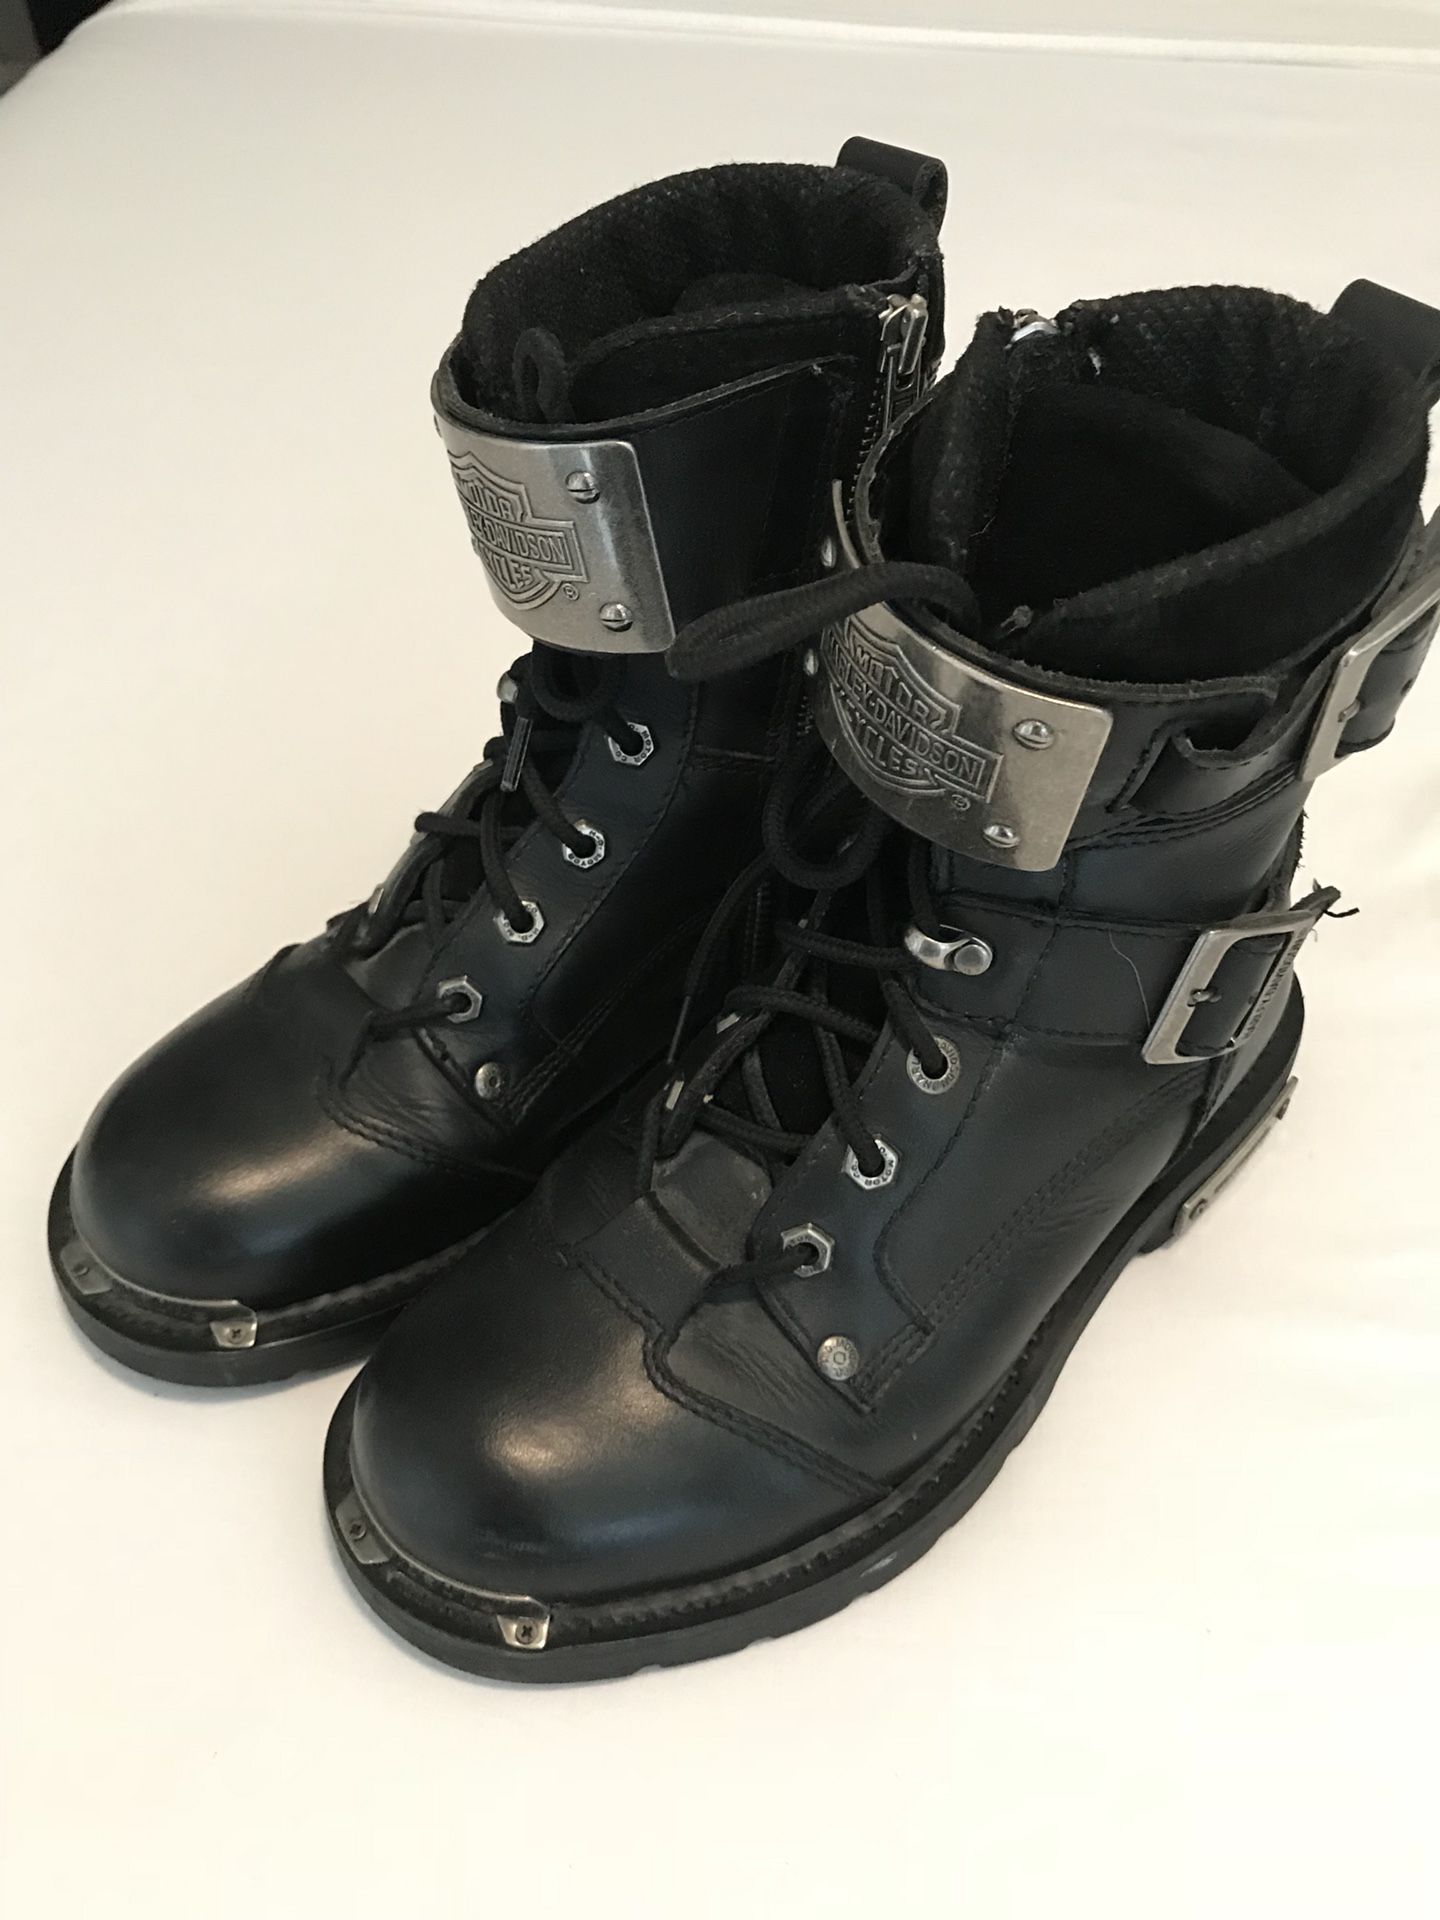 Motorcycle boots - Harley Davidson men’s size 7